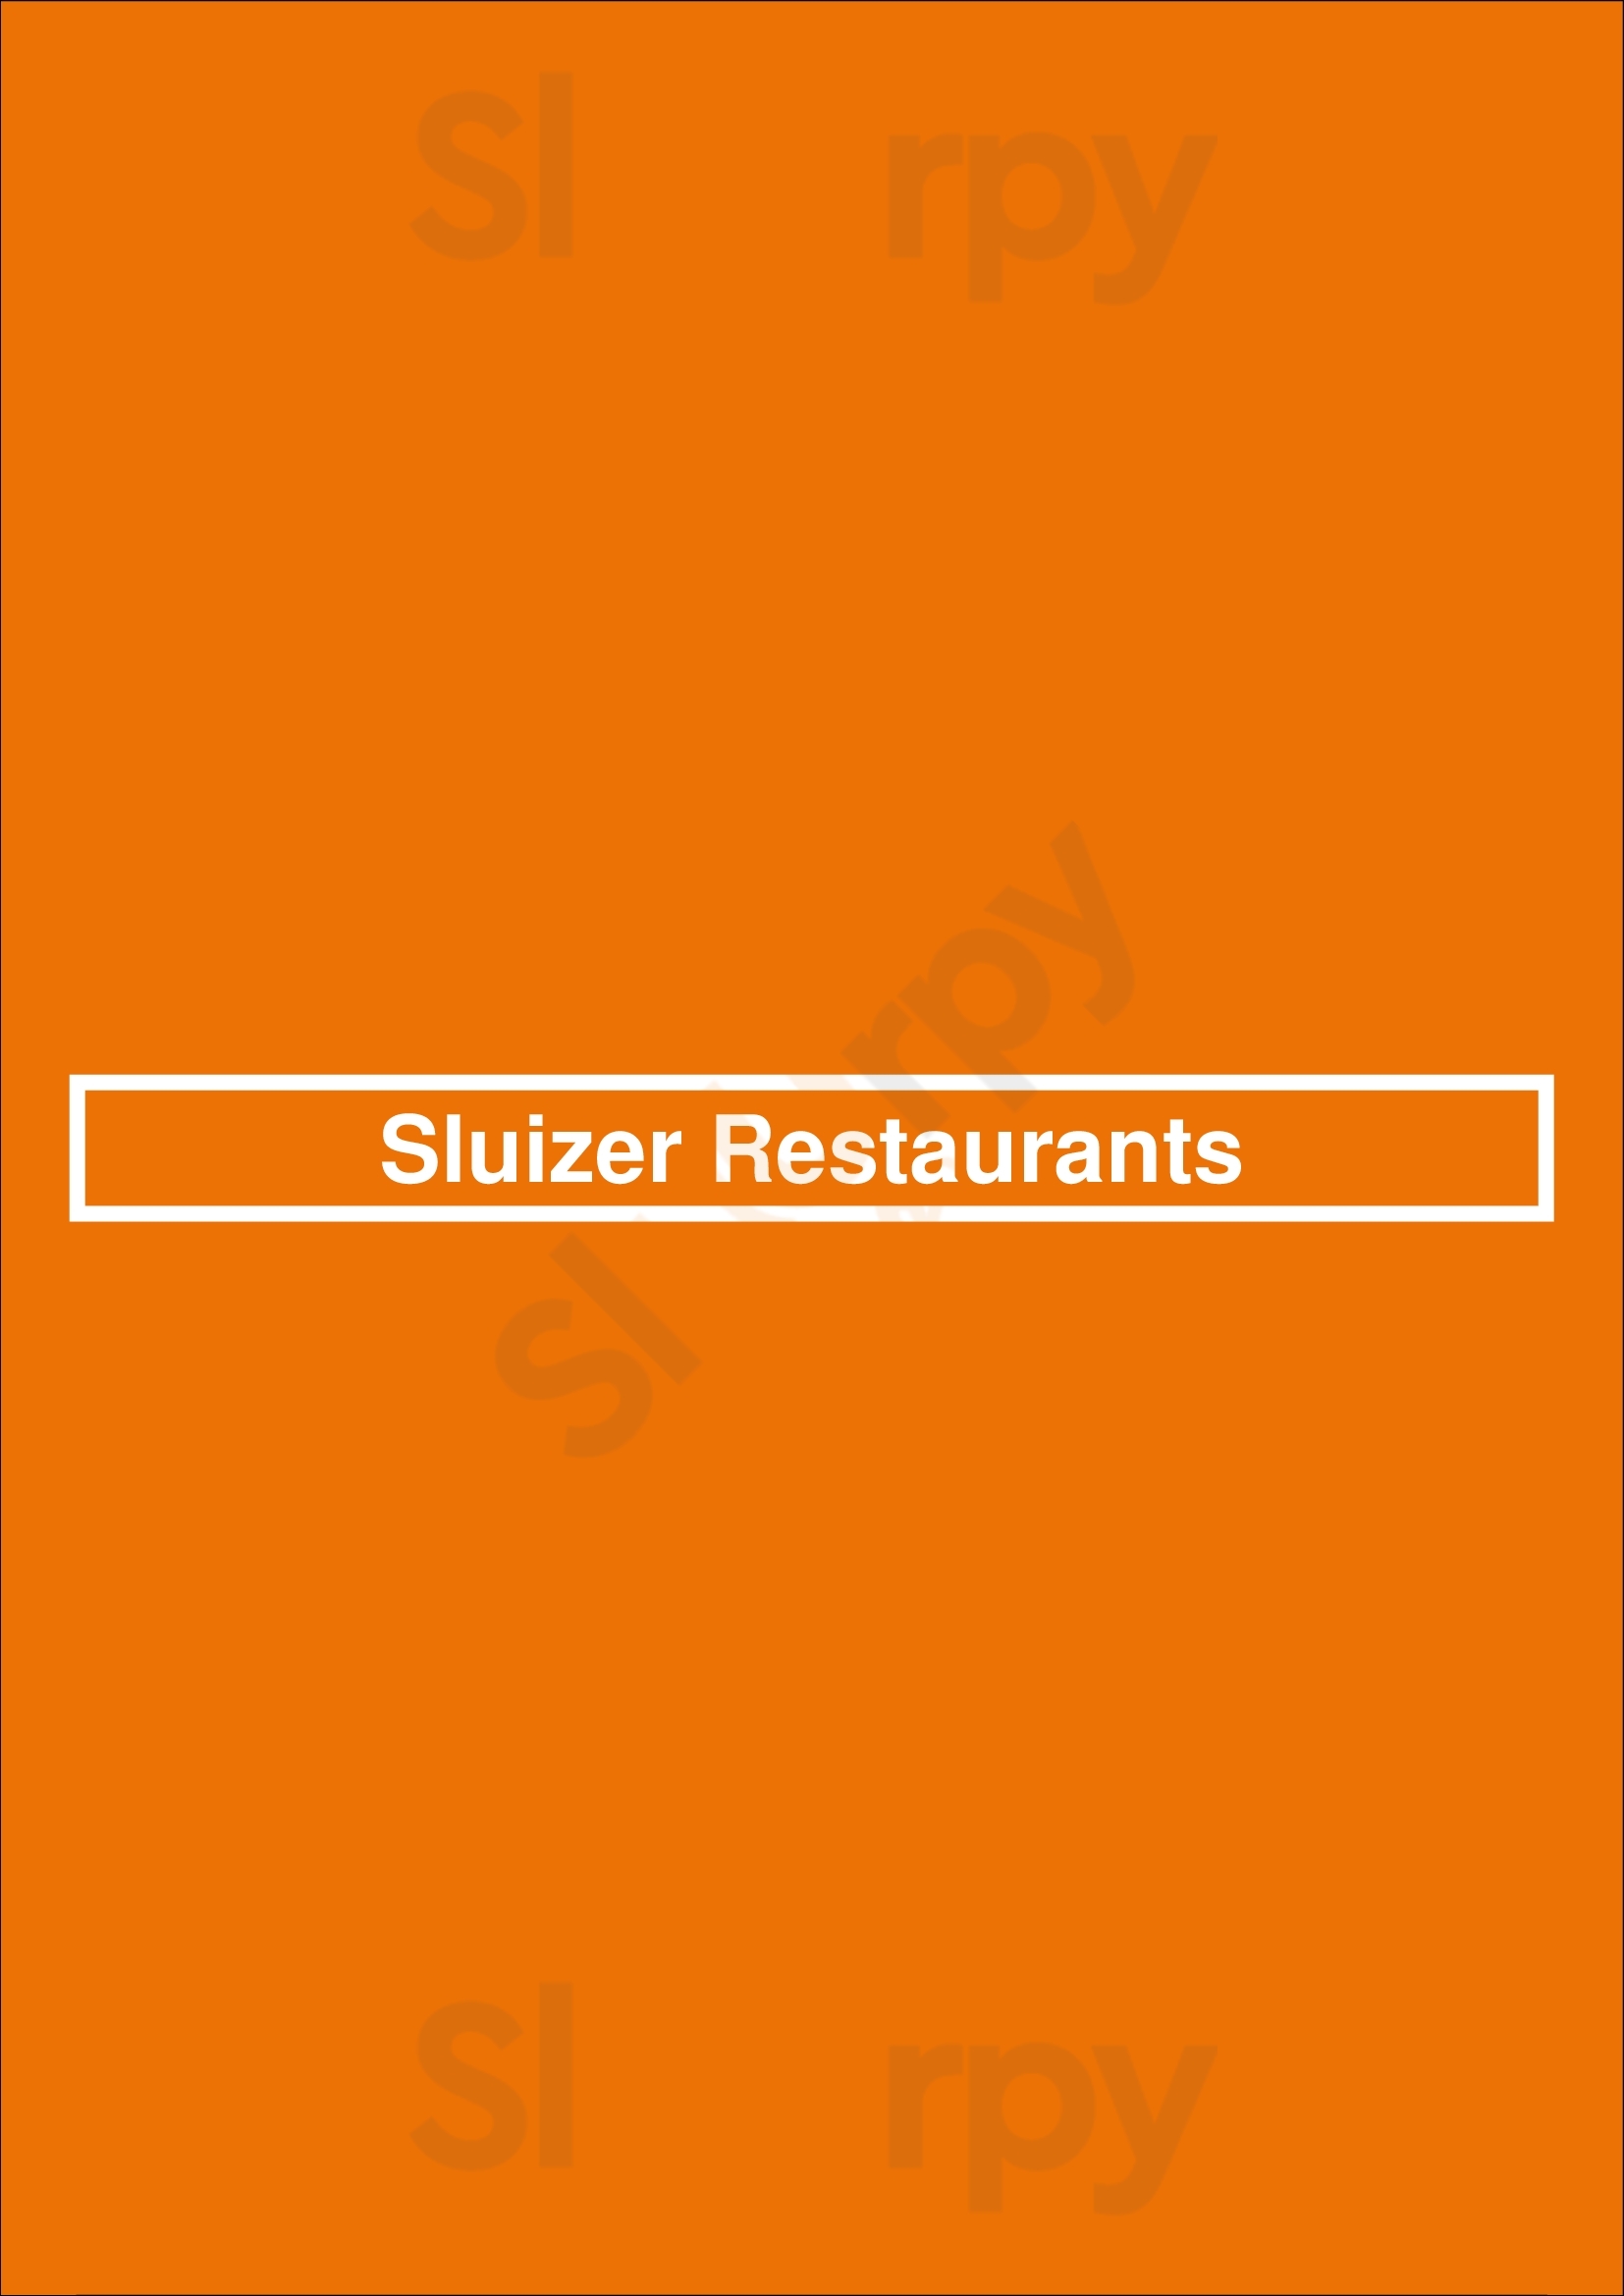 Sluizer Restaurants Amsterdam Menu - 1